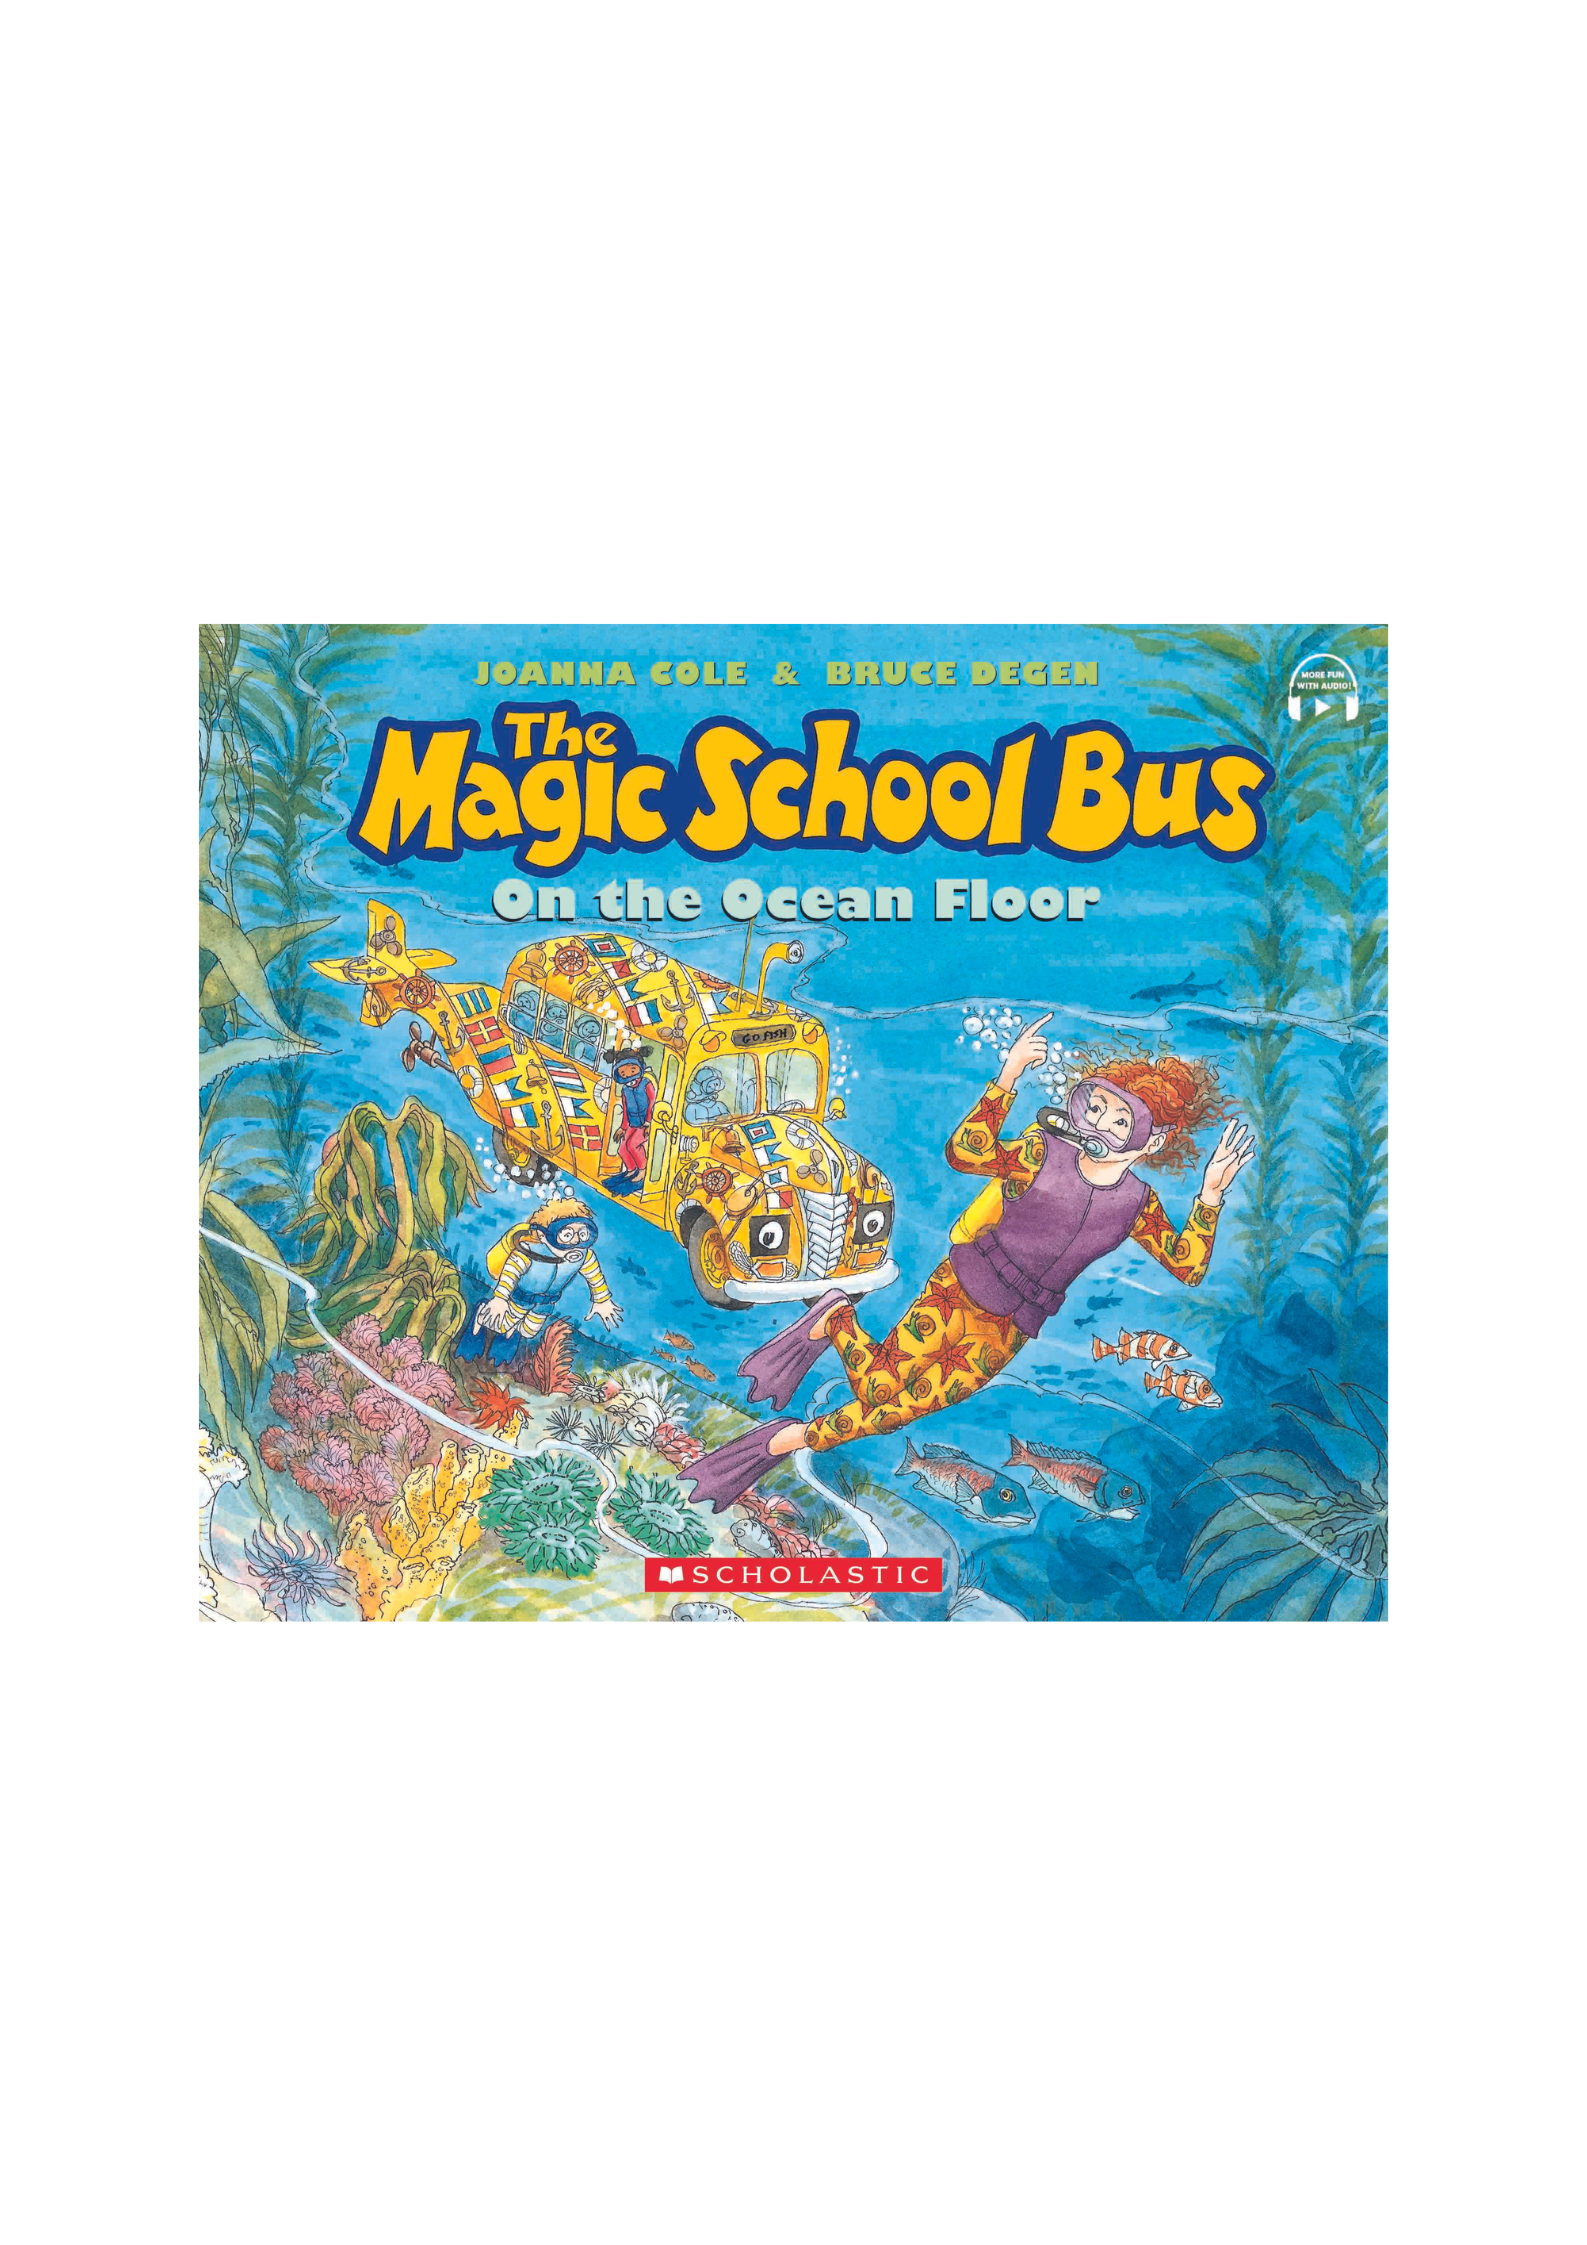 The Magic School Bus: On the Ocean Floor